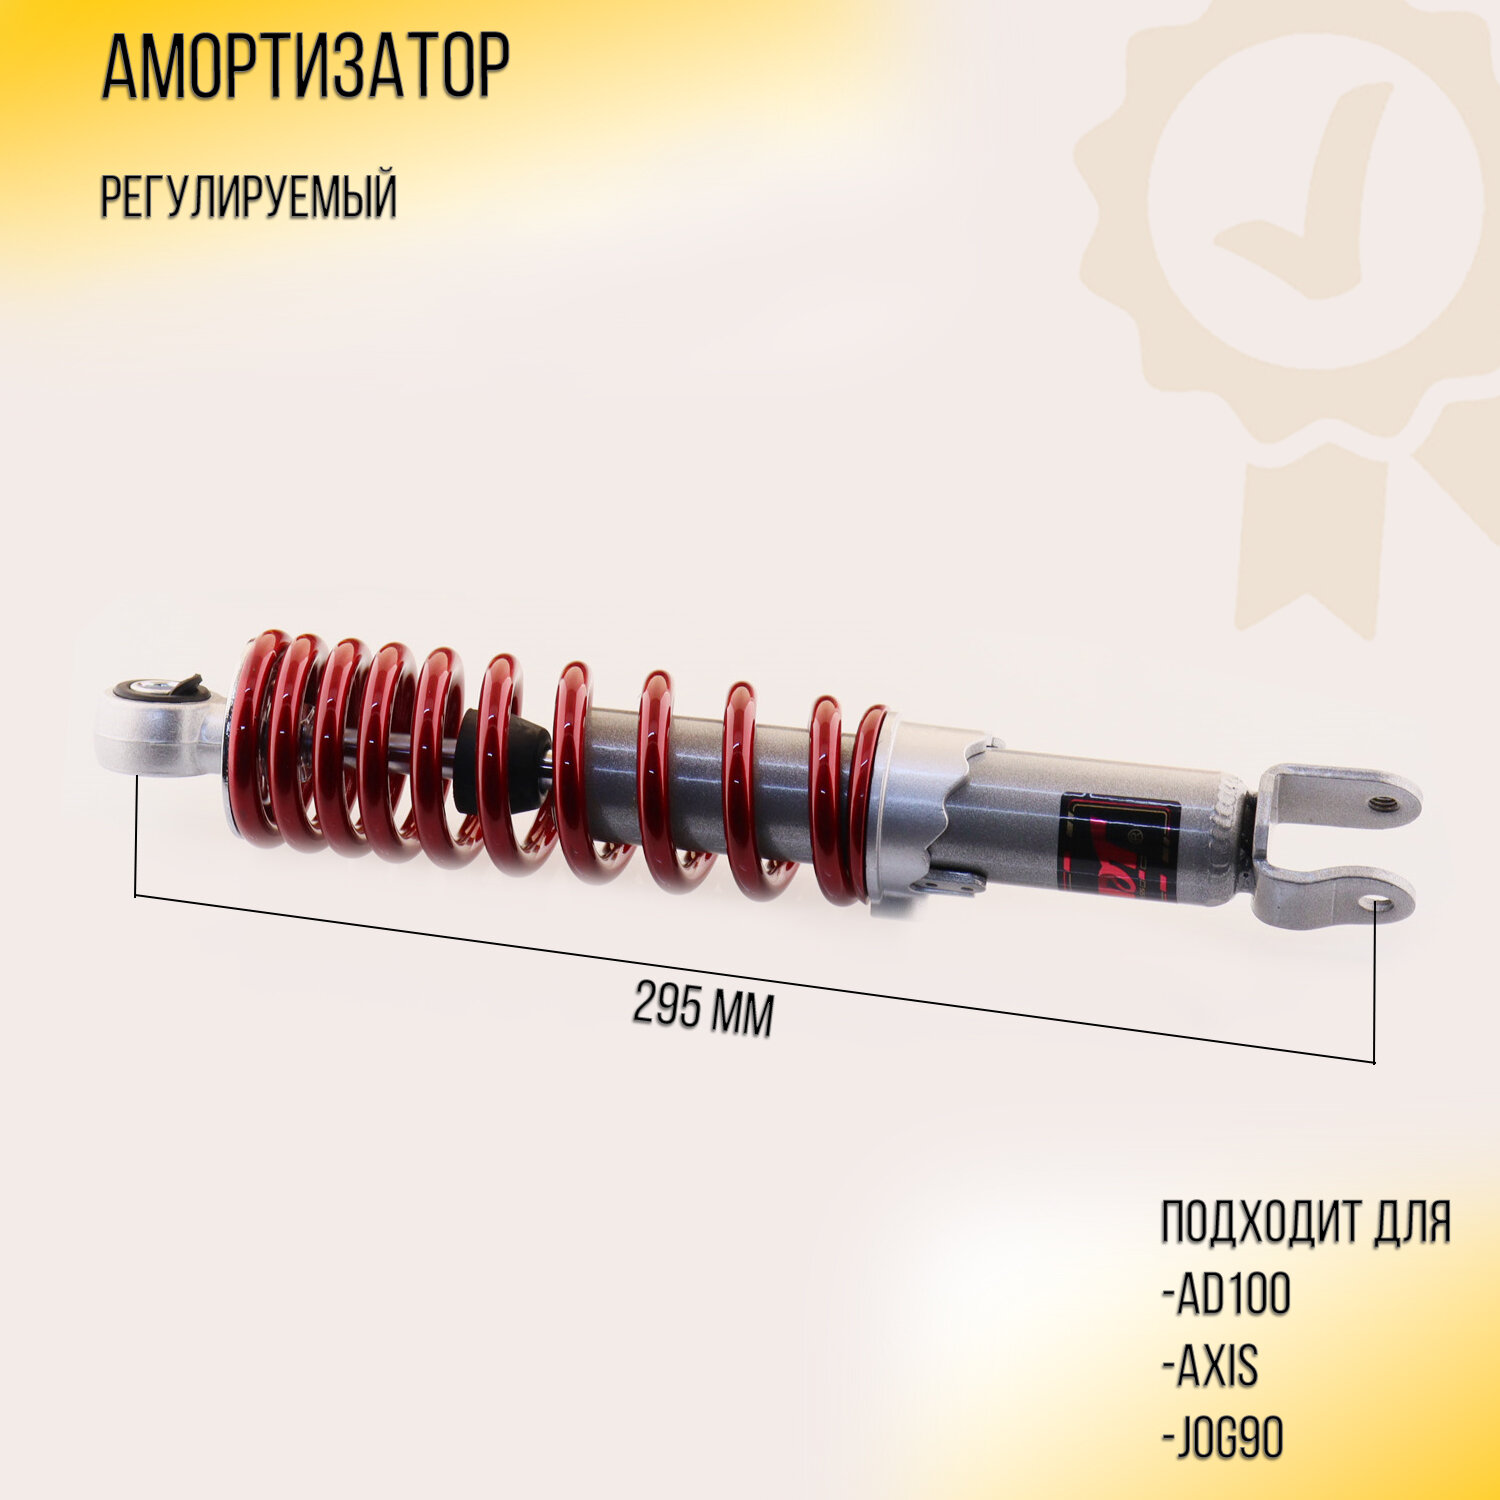 Амортизатор AD100 AXIS BW'S JOG90 300mm регулируемый (красный металлик) "NDT"